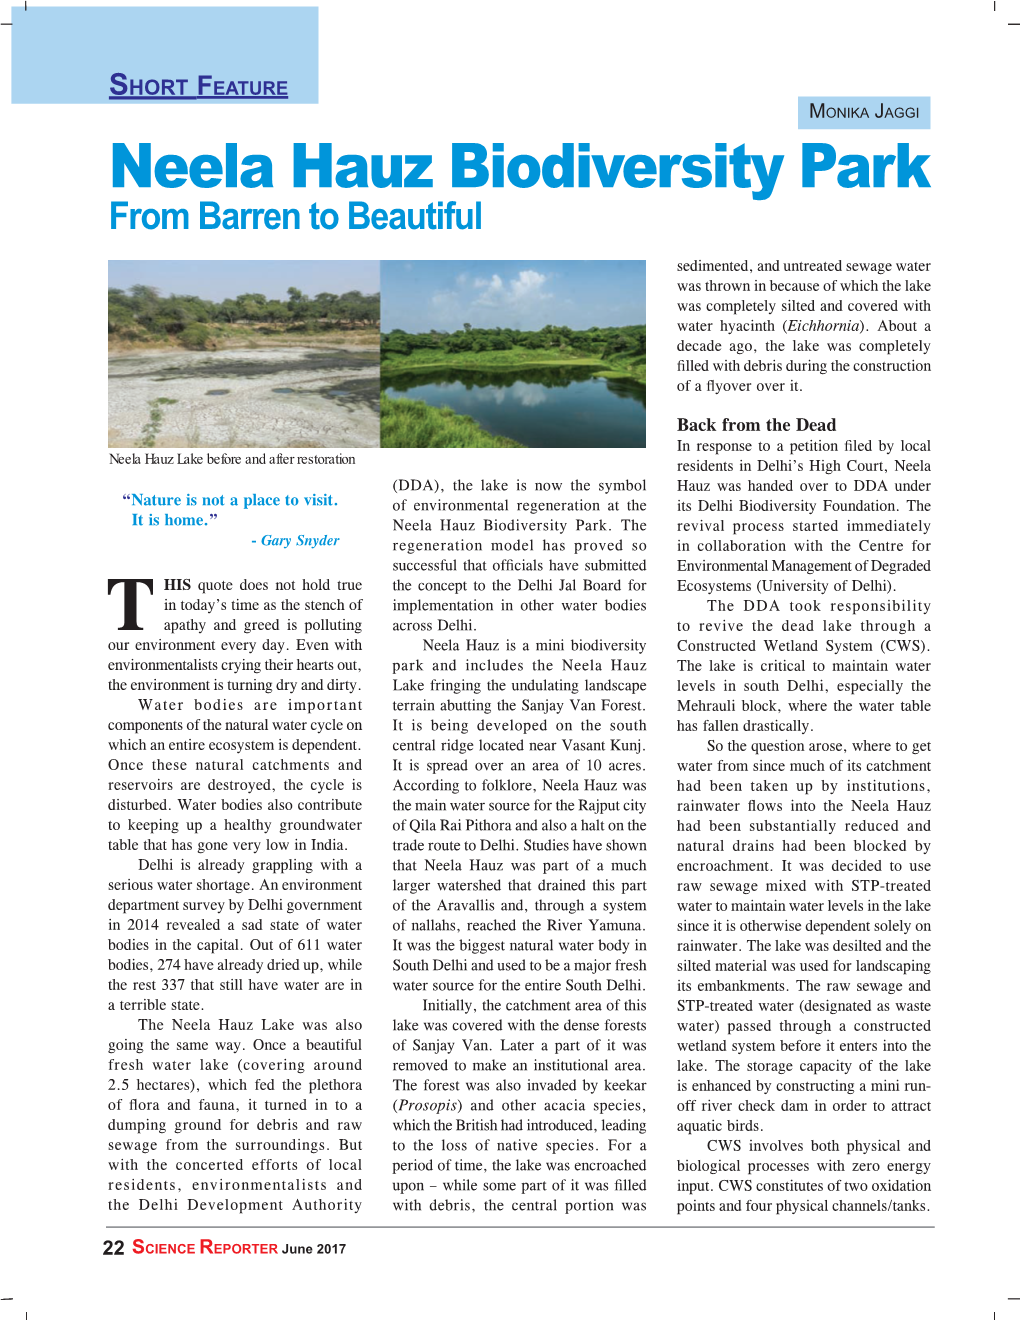 Neela Hauz Biodiversity Park from Barren to Beautiful